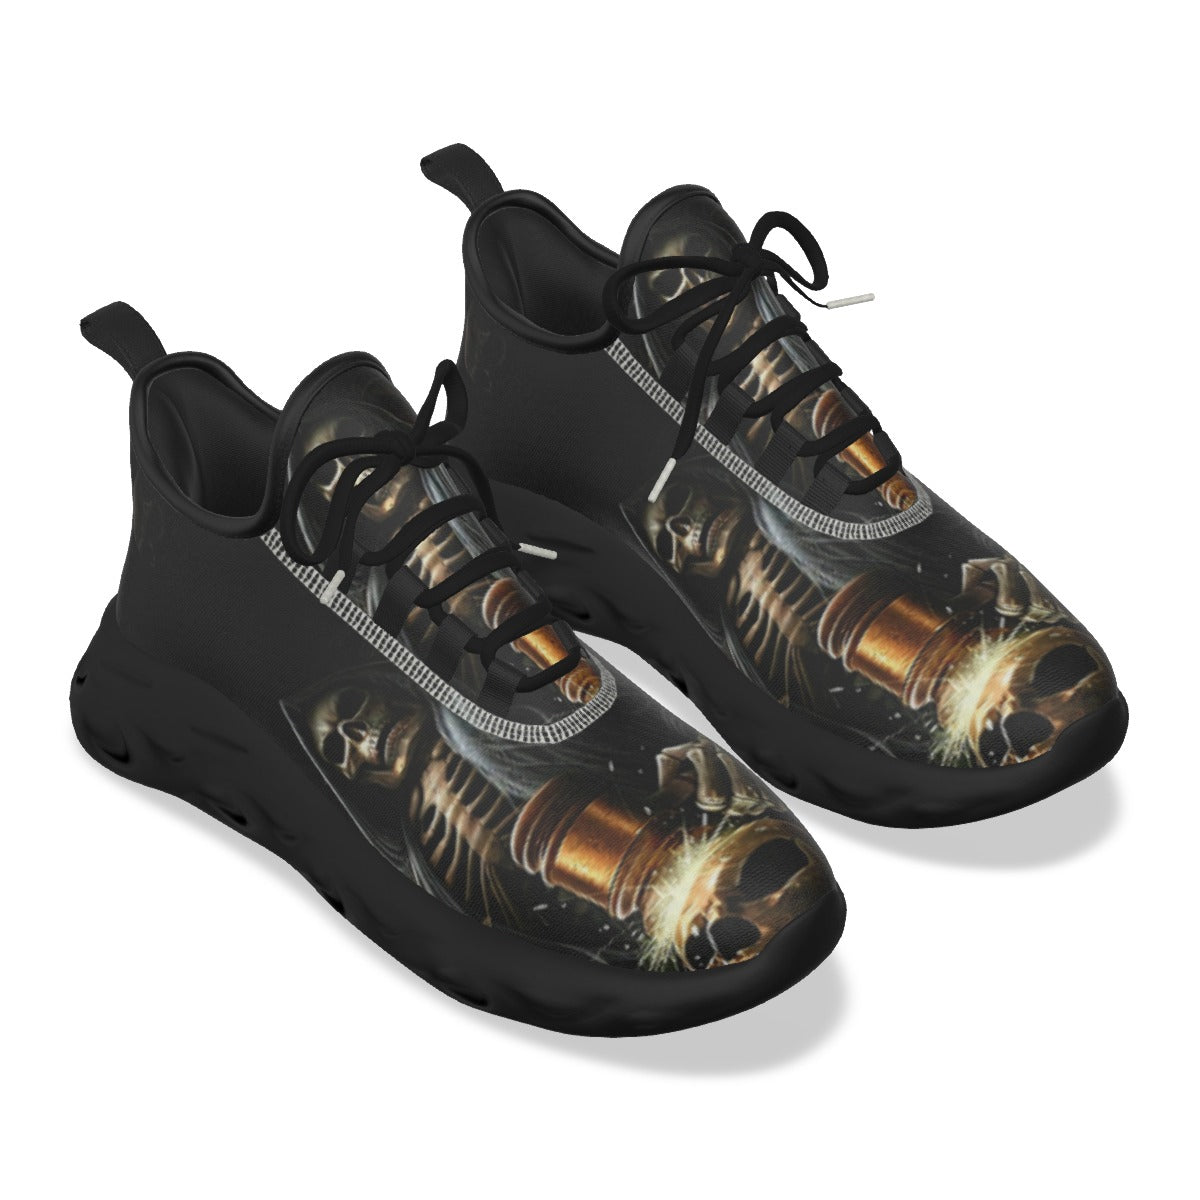 Grim reaper Men's Light Sports Shoes, Gothic Halloween skeleton men's sneakers shoes